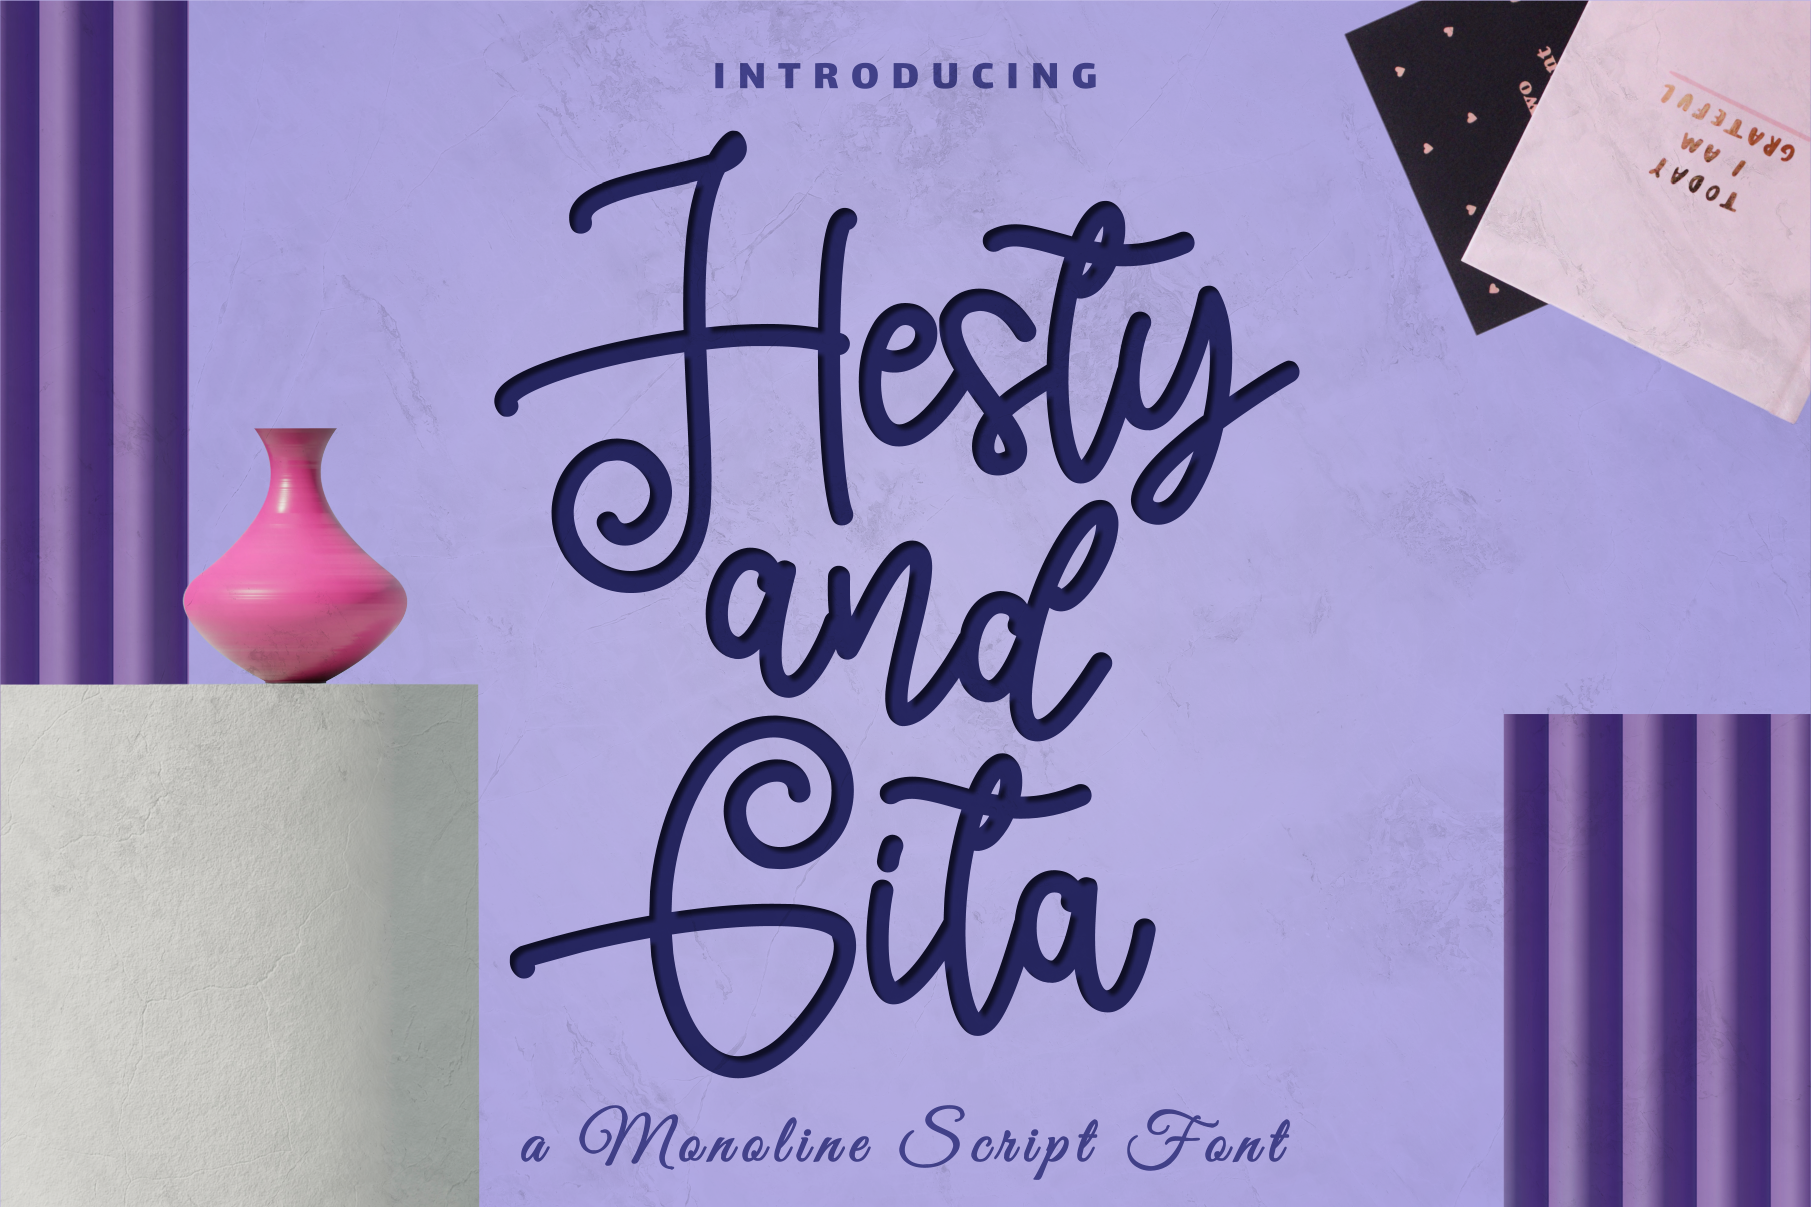 Hesty and Gita